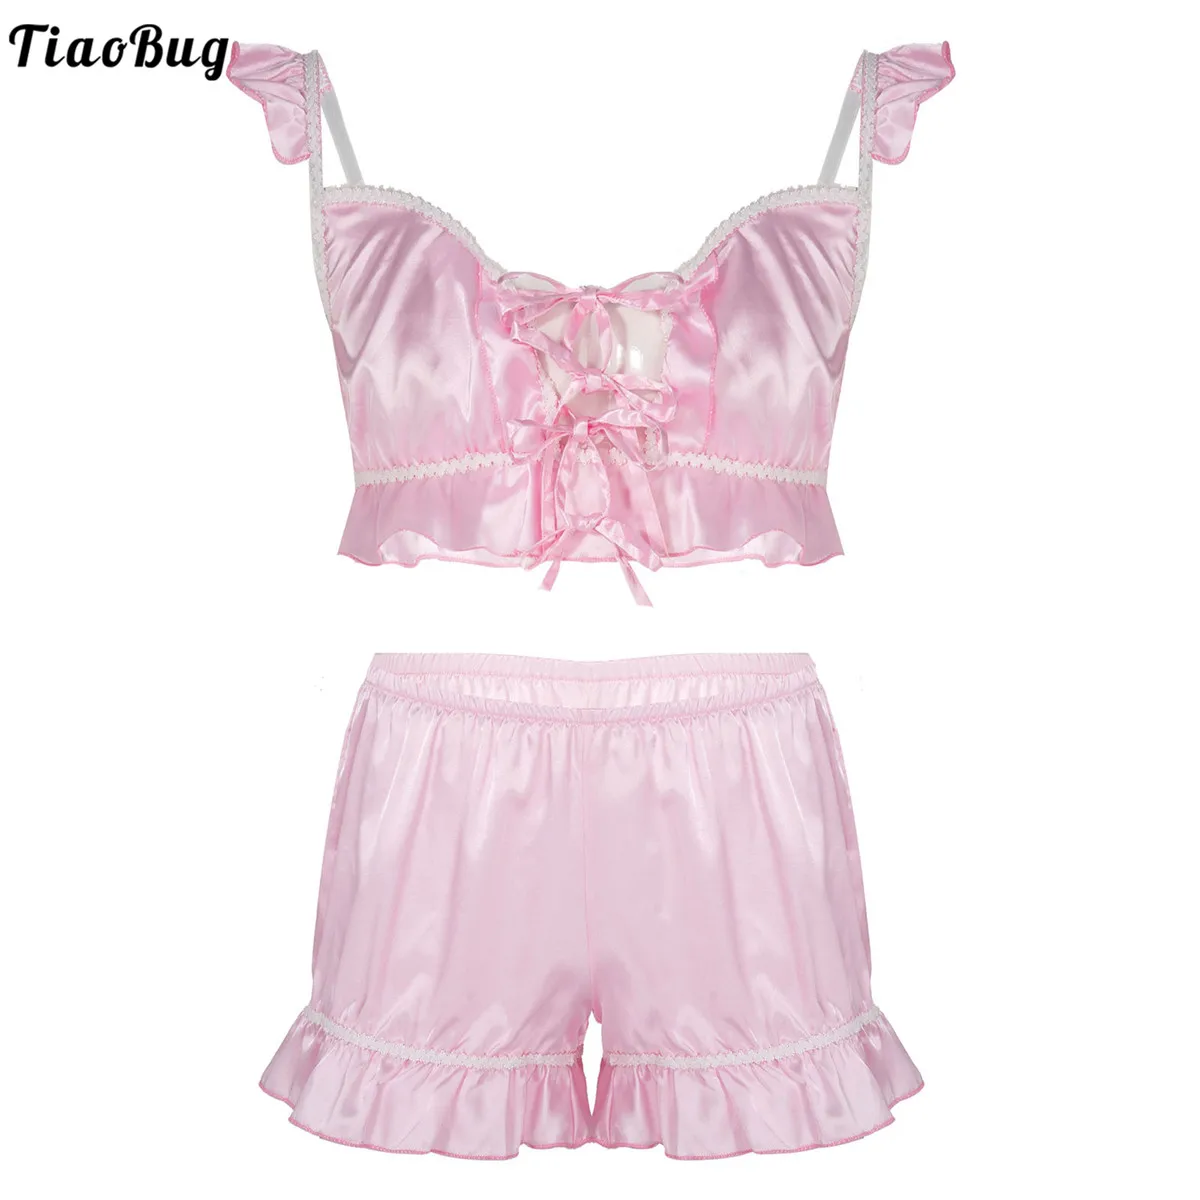 

TiaoBug Men Satin Lingerie Set Pajama Set Sissy Gay Nightwear Sleepwear Lace-Up Front Ruffled Bra Tops With Shorts